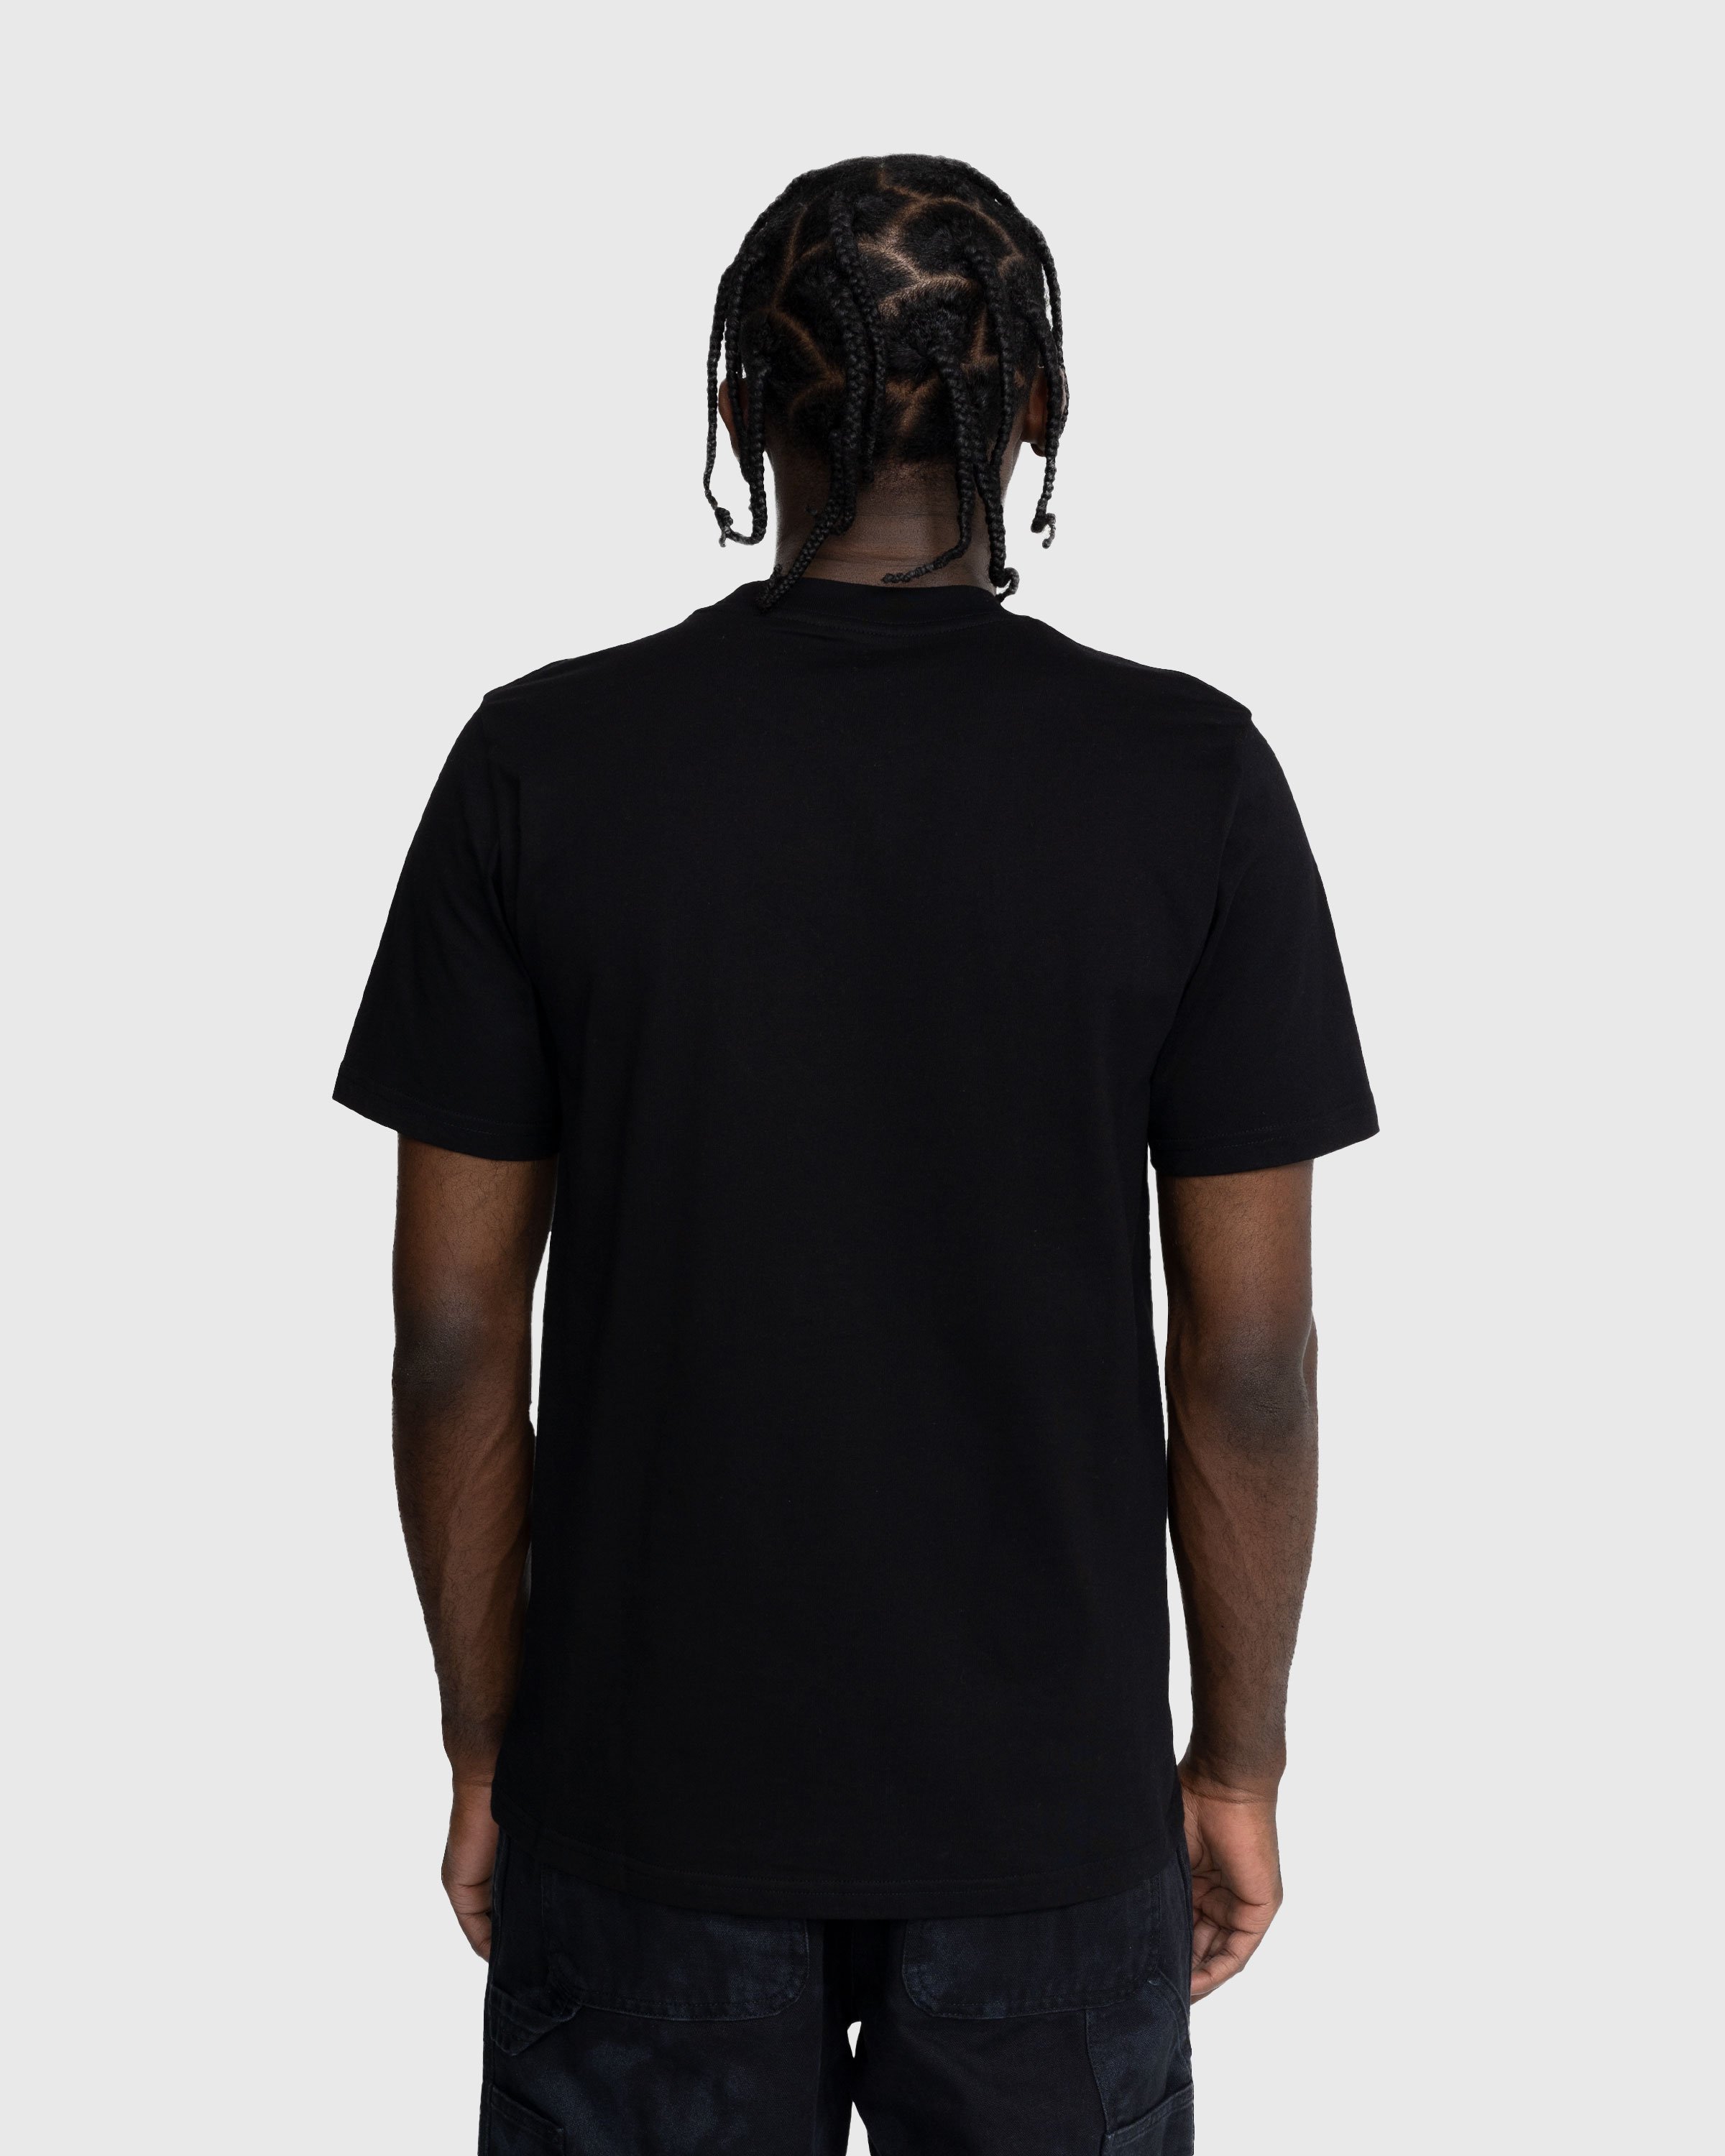 Carhartt WIP - Black Jack T-Shirt Black - Clothing - Black - Image 3